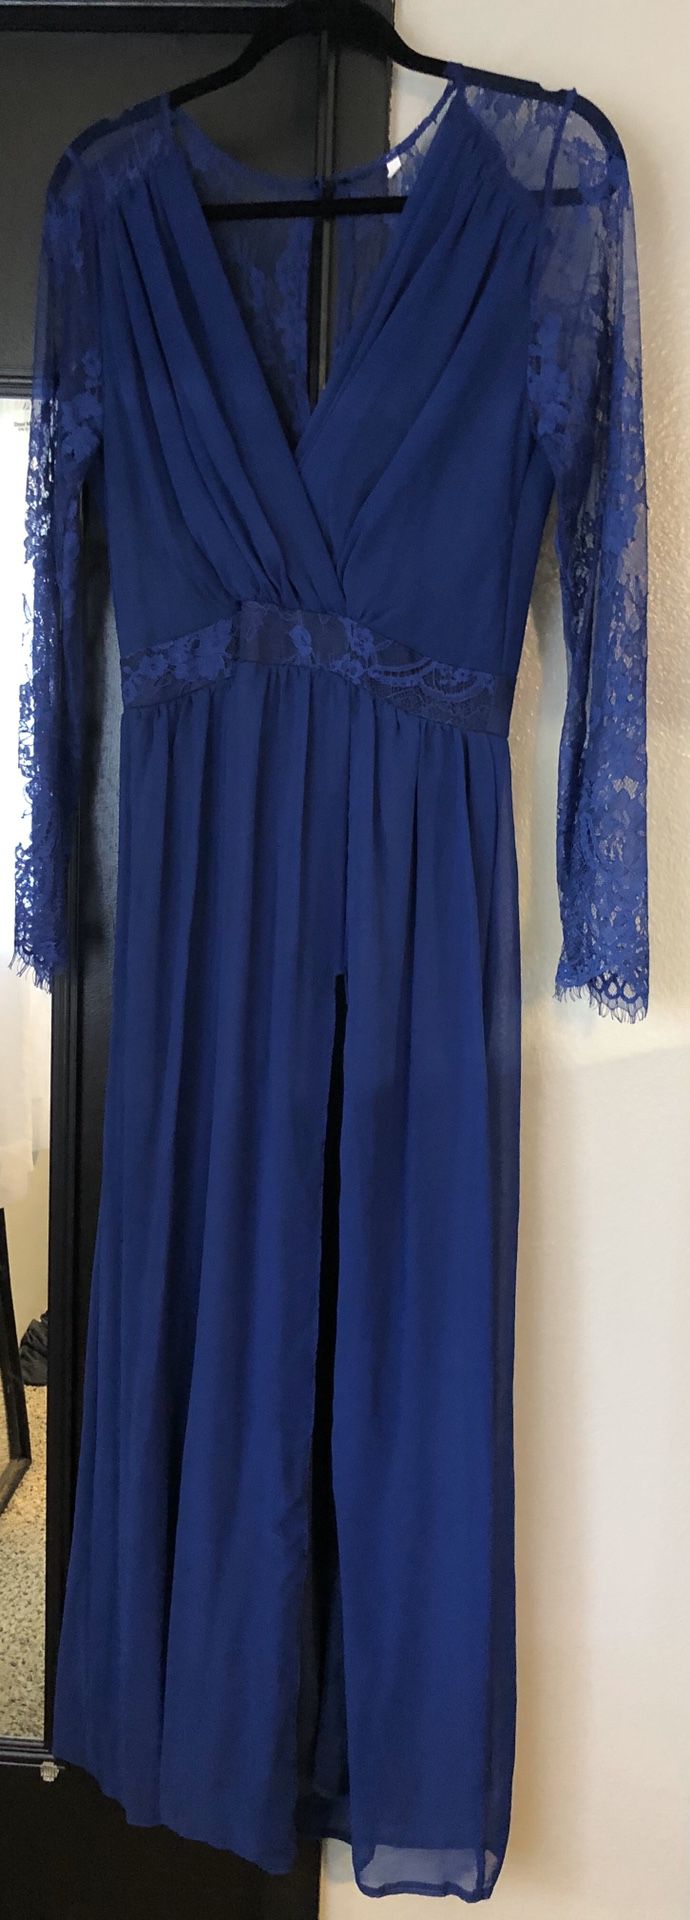 NEW Royal blue long dress medium size